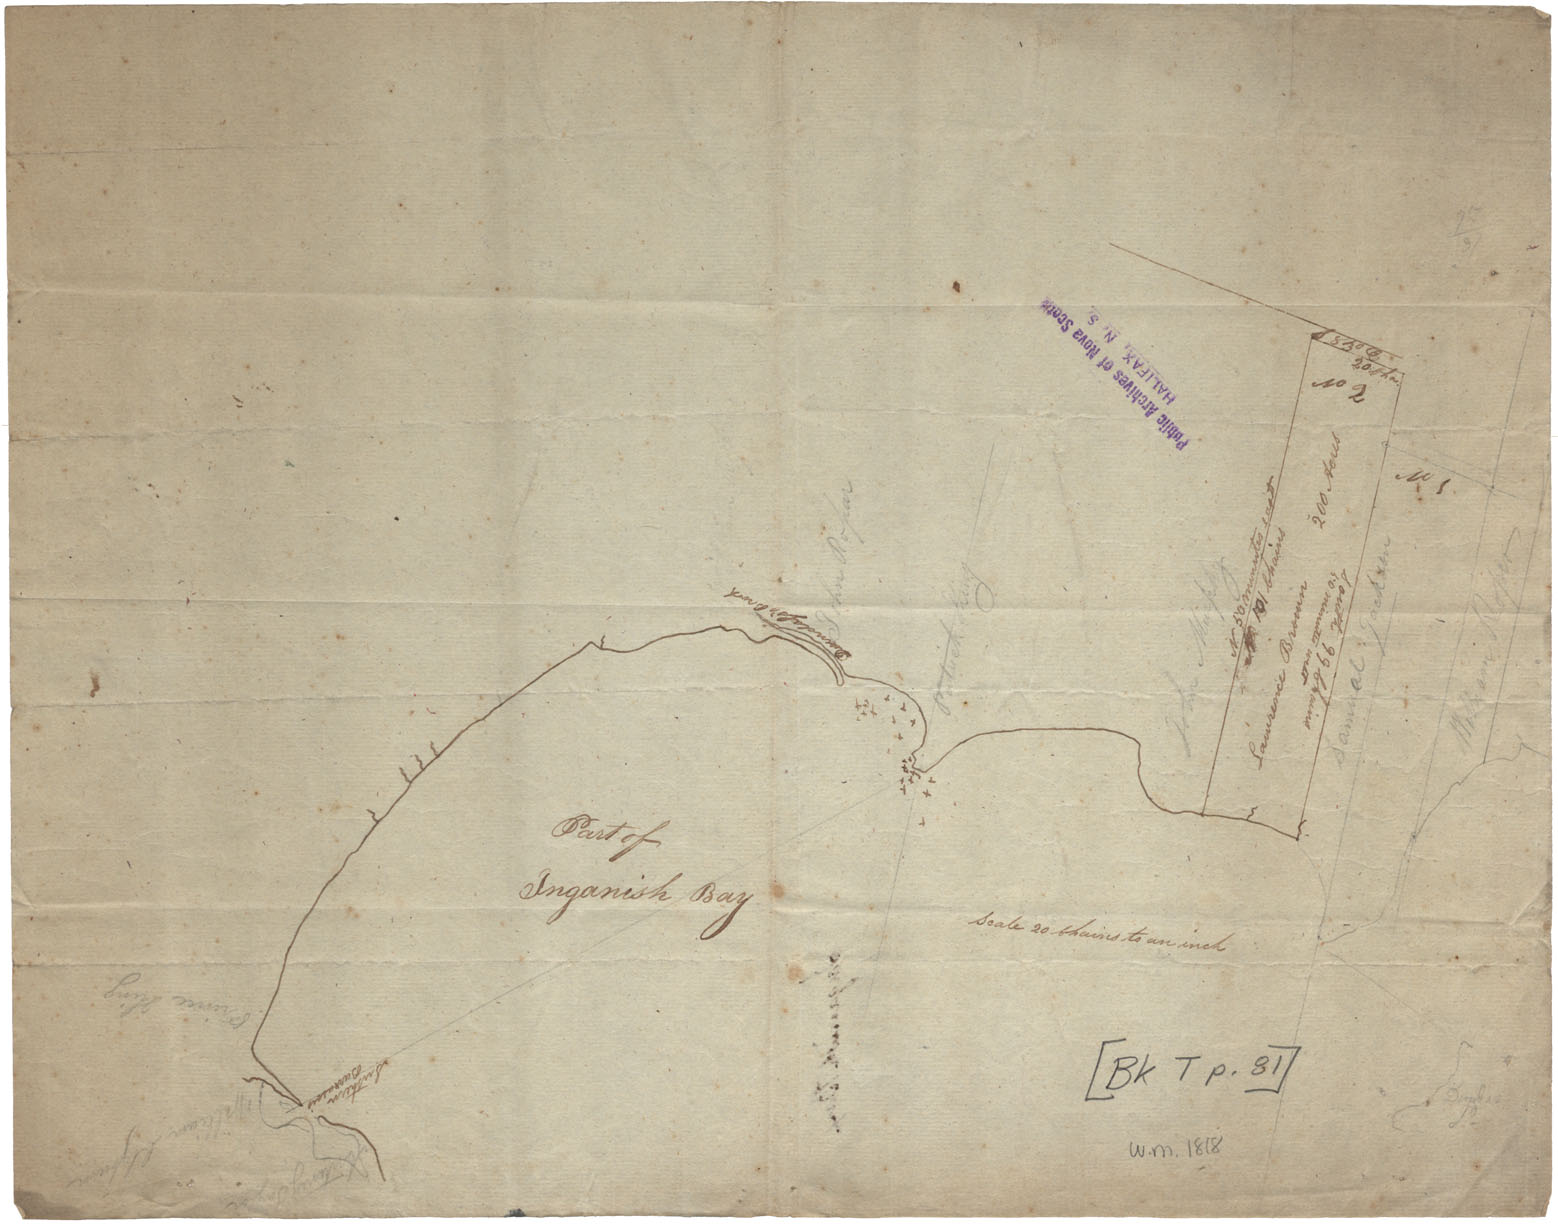 Cape Breton Ingonish Bay BK.T. p.81 w.m.1818